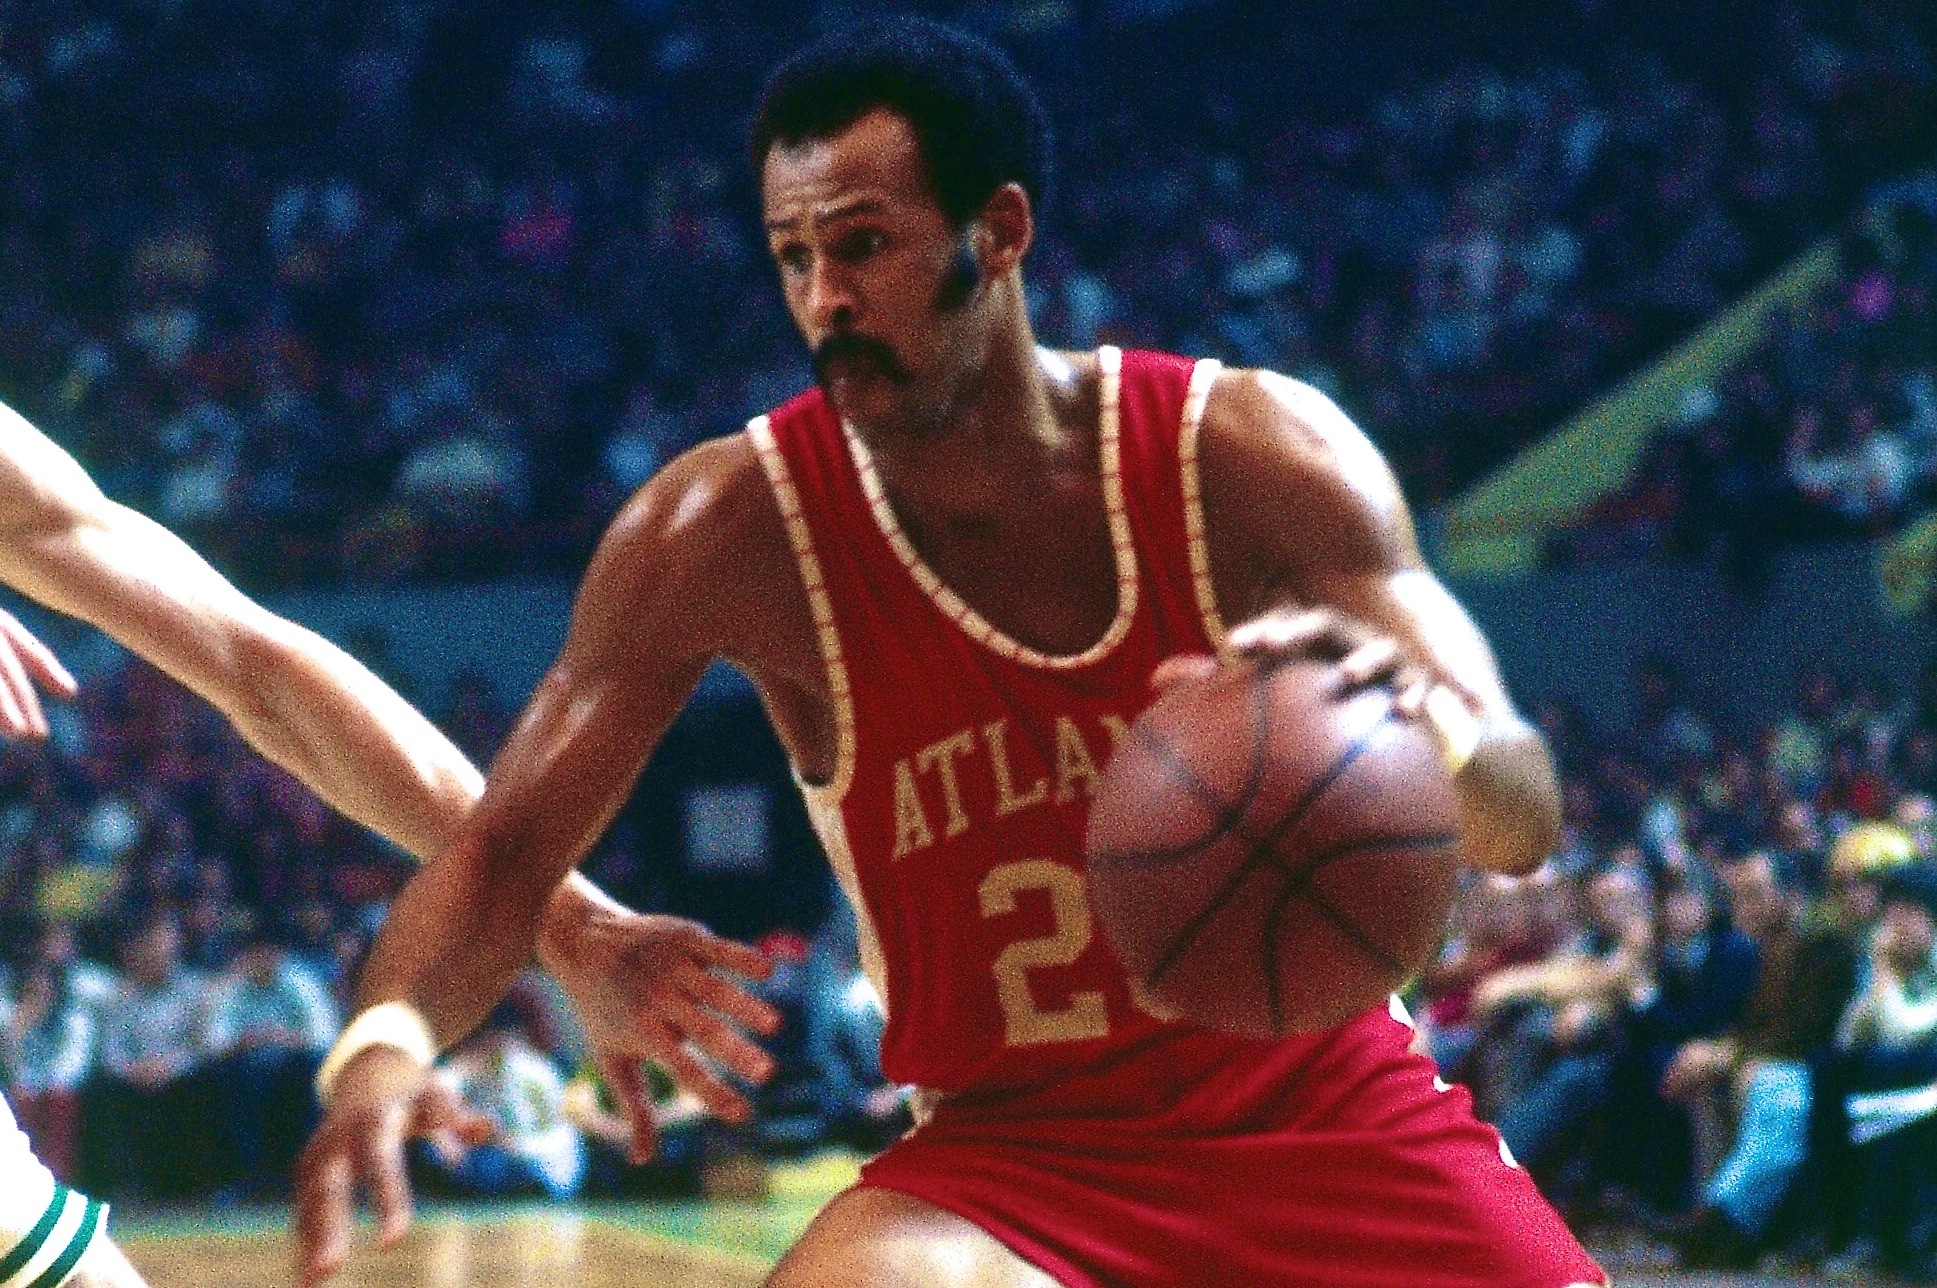 Atlanta Hawks alum 'Sweet' Lou Hudson Hall of Fame inductee